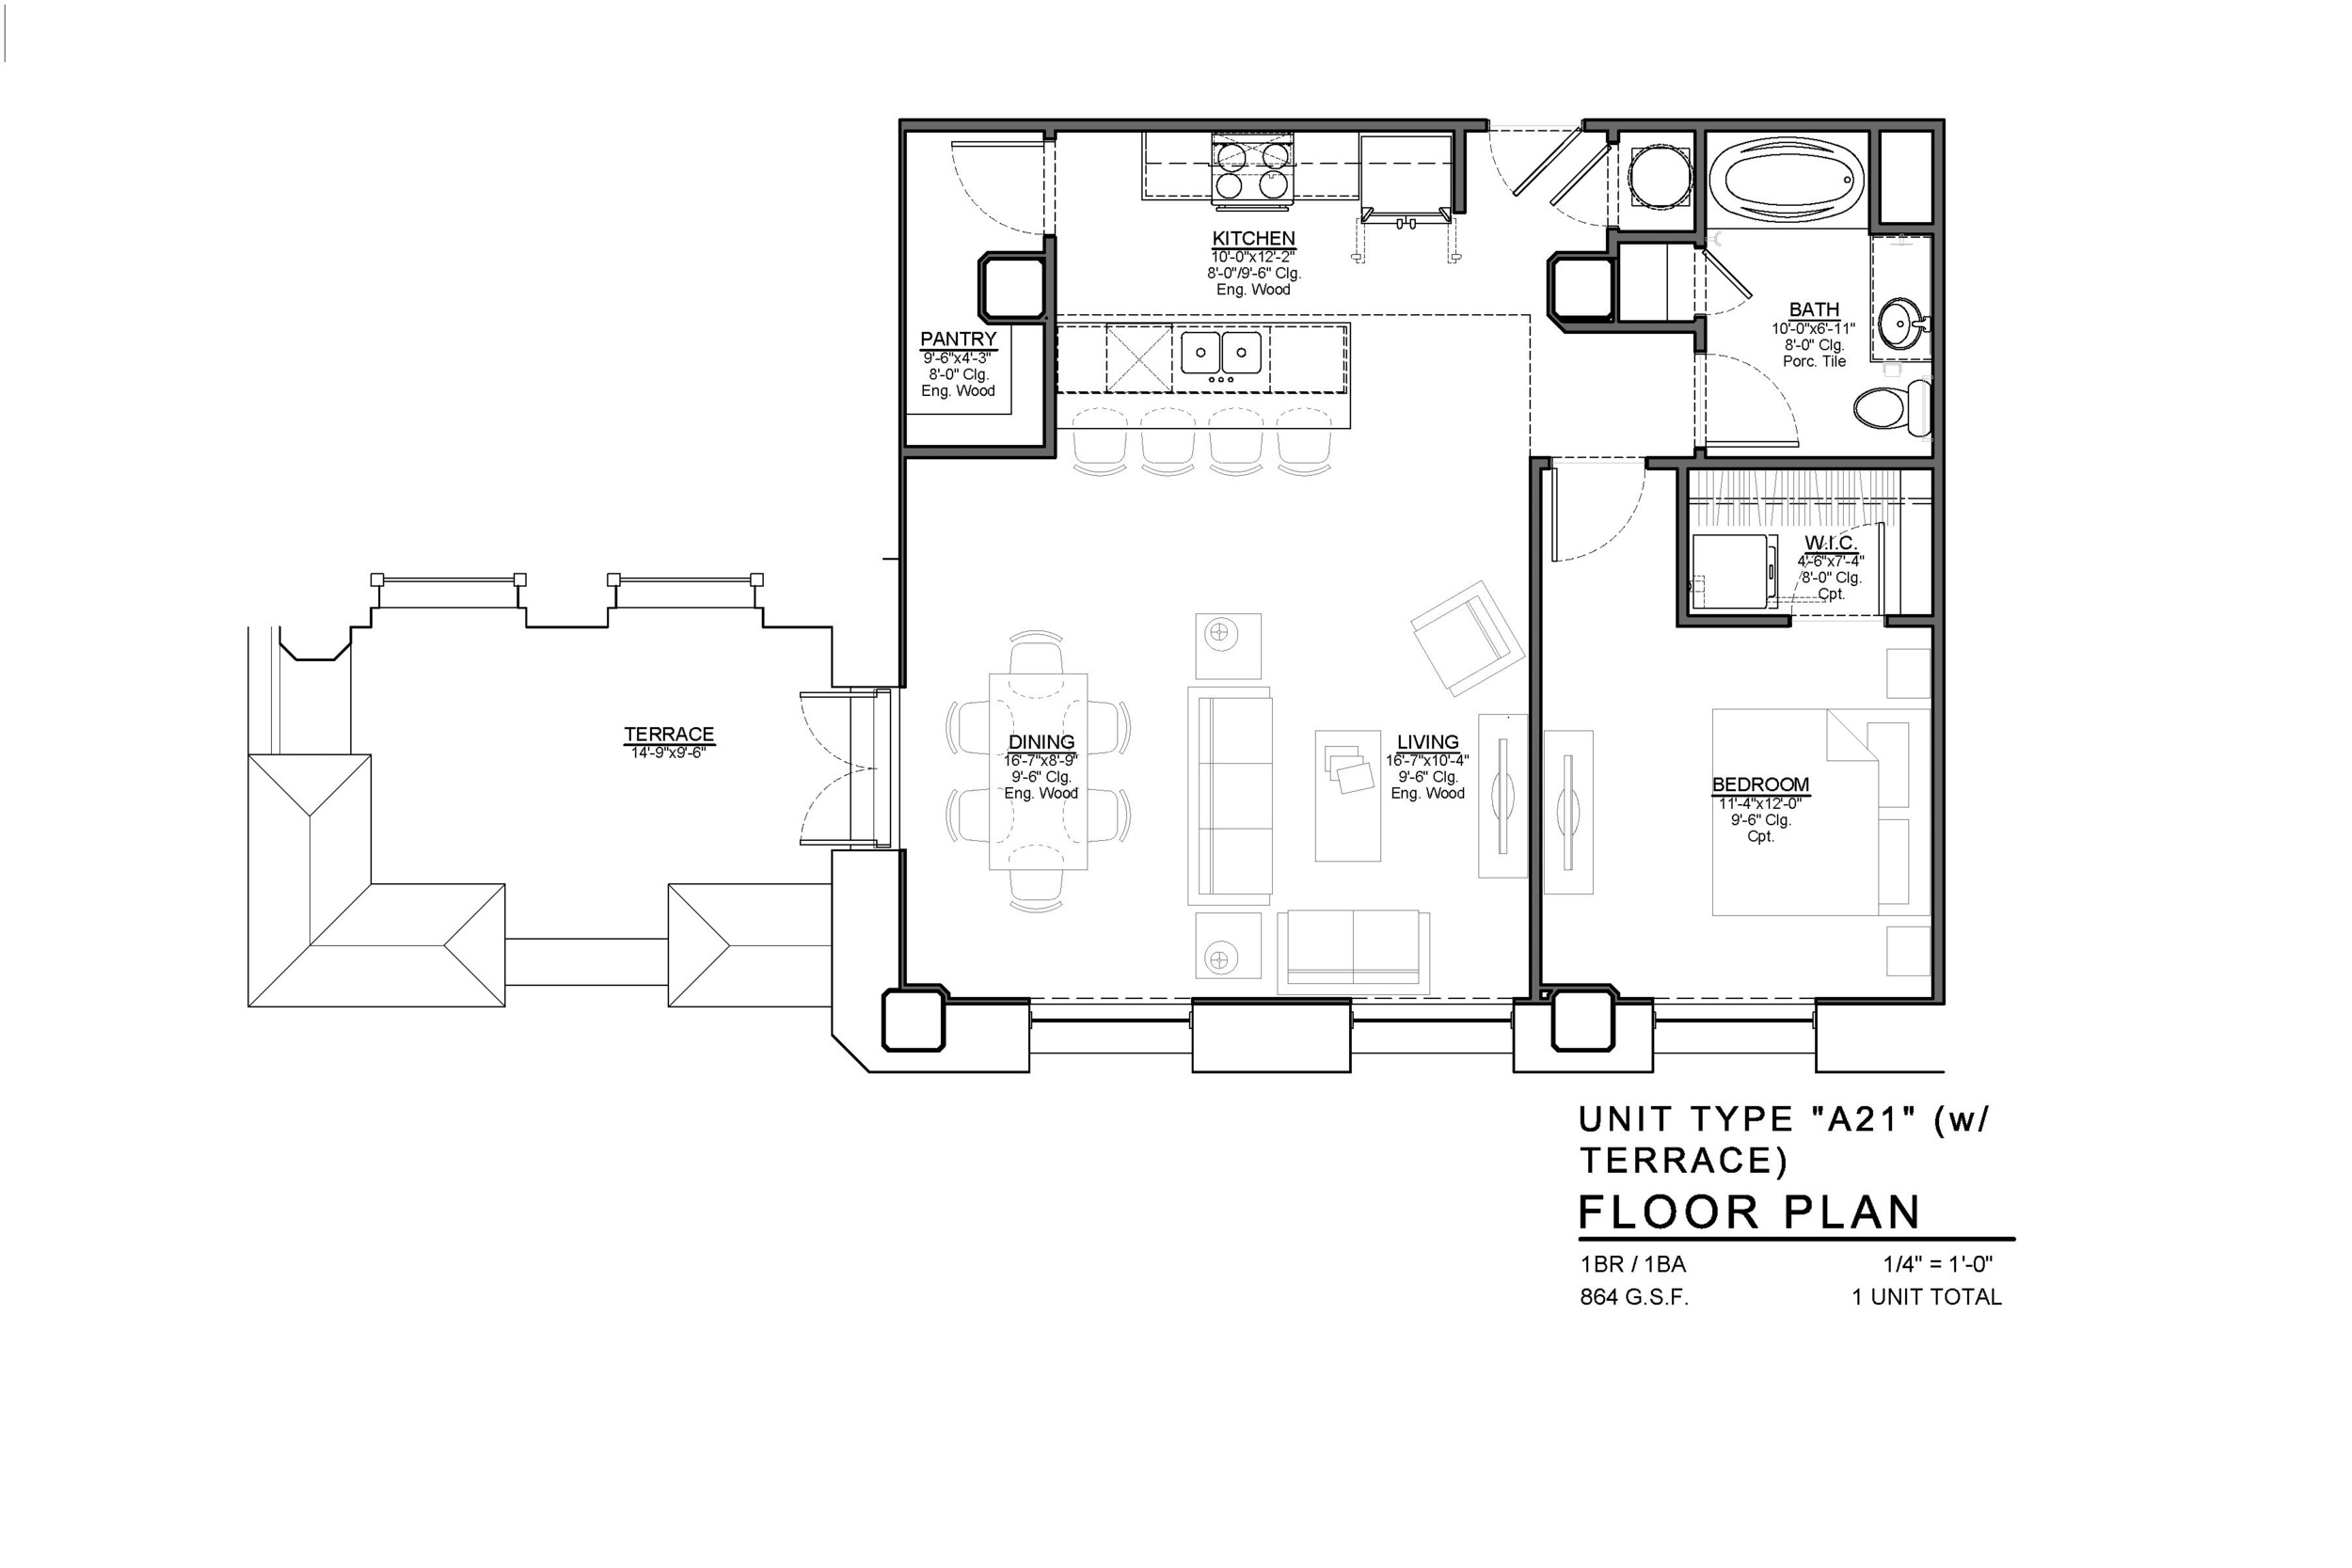 A21 FLOOR PLAN: 1 BEDROOM / 1 BATH